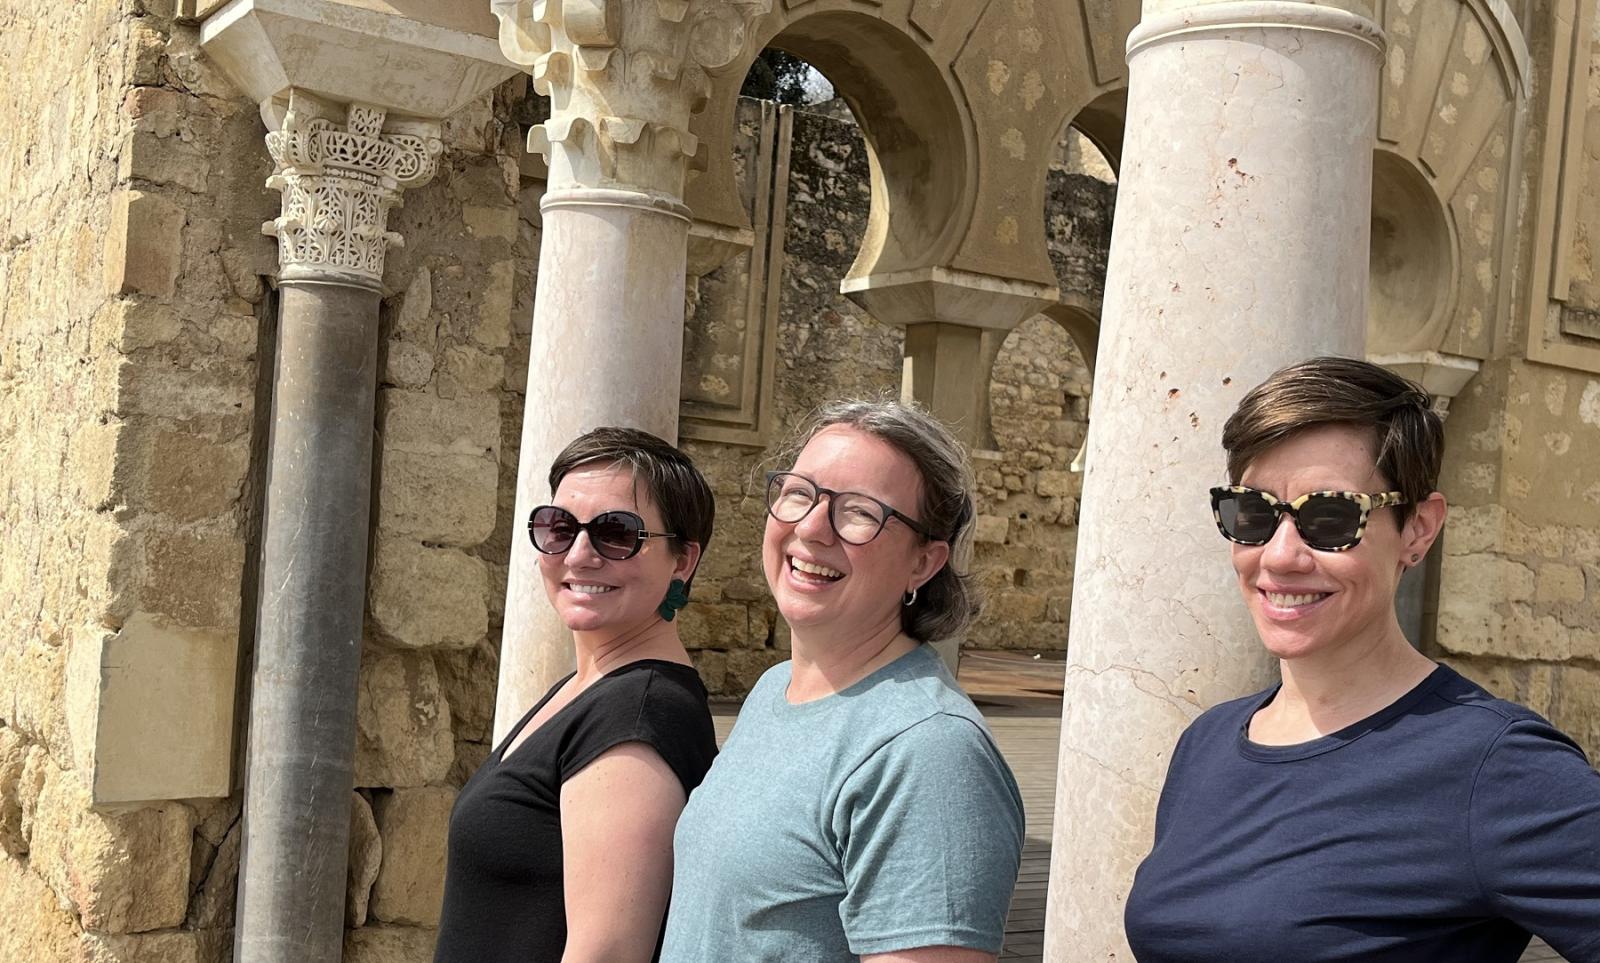 Madera Allan, Danielle Joyner, and Sara Gross Ceballos pose for a photo in the 10th-century ruins of Madinat al-Zahra, the palace complex built outside of Córdoba.  